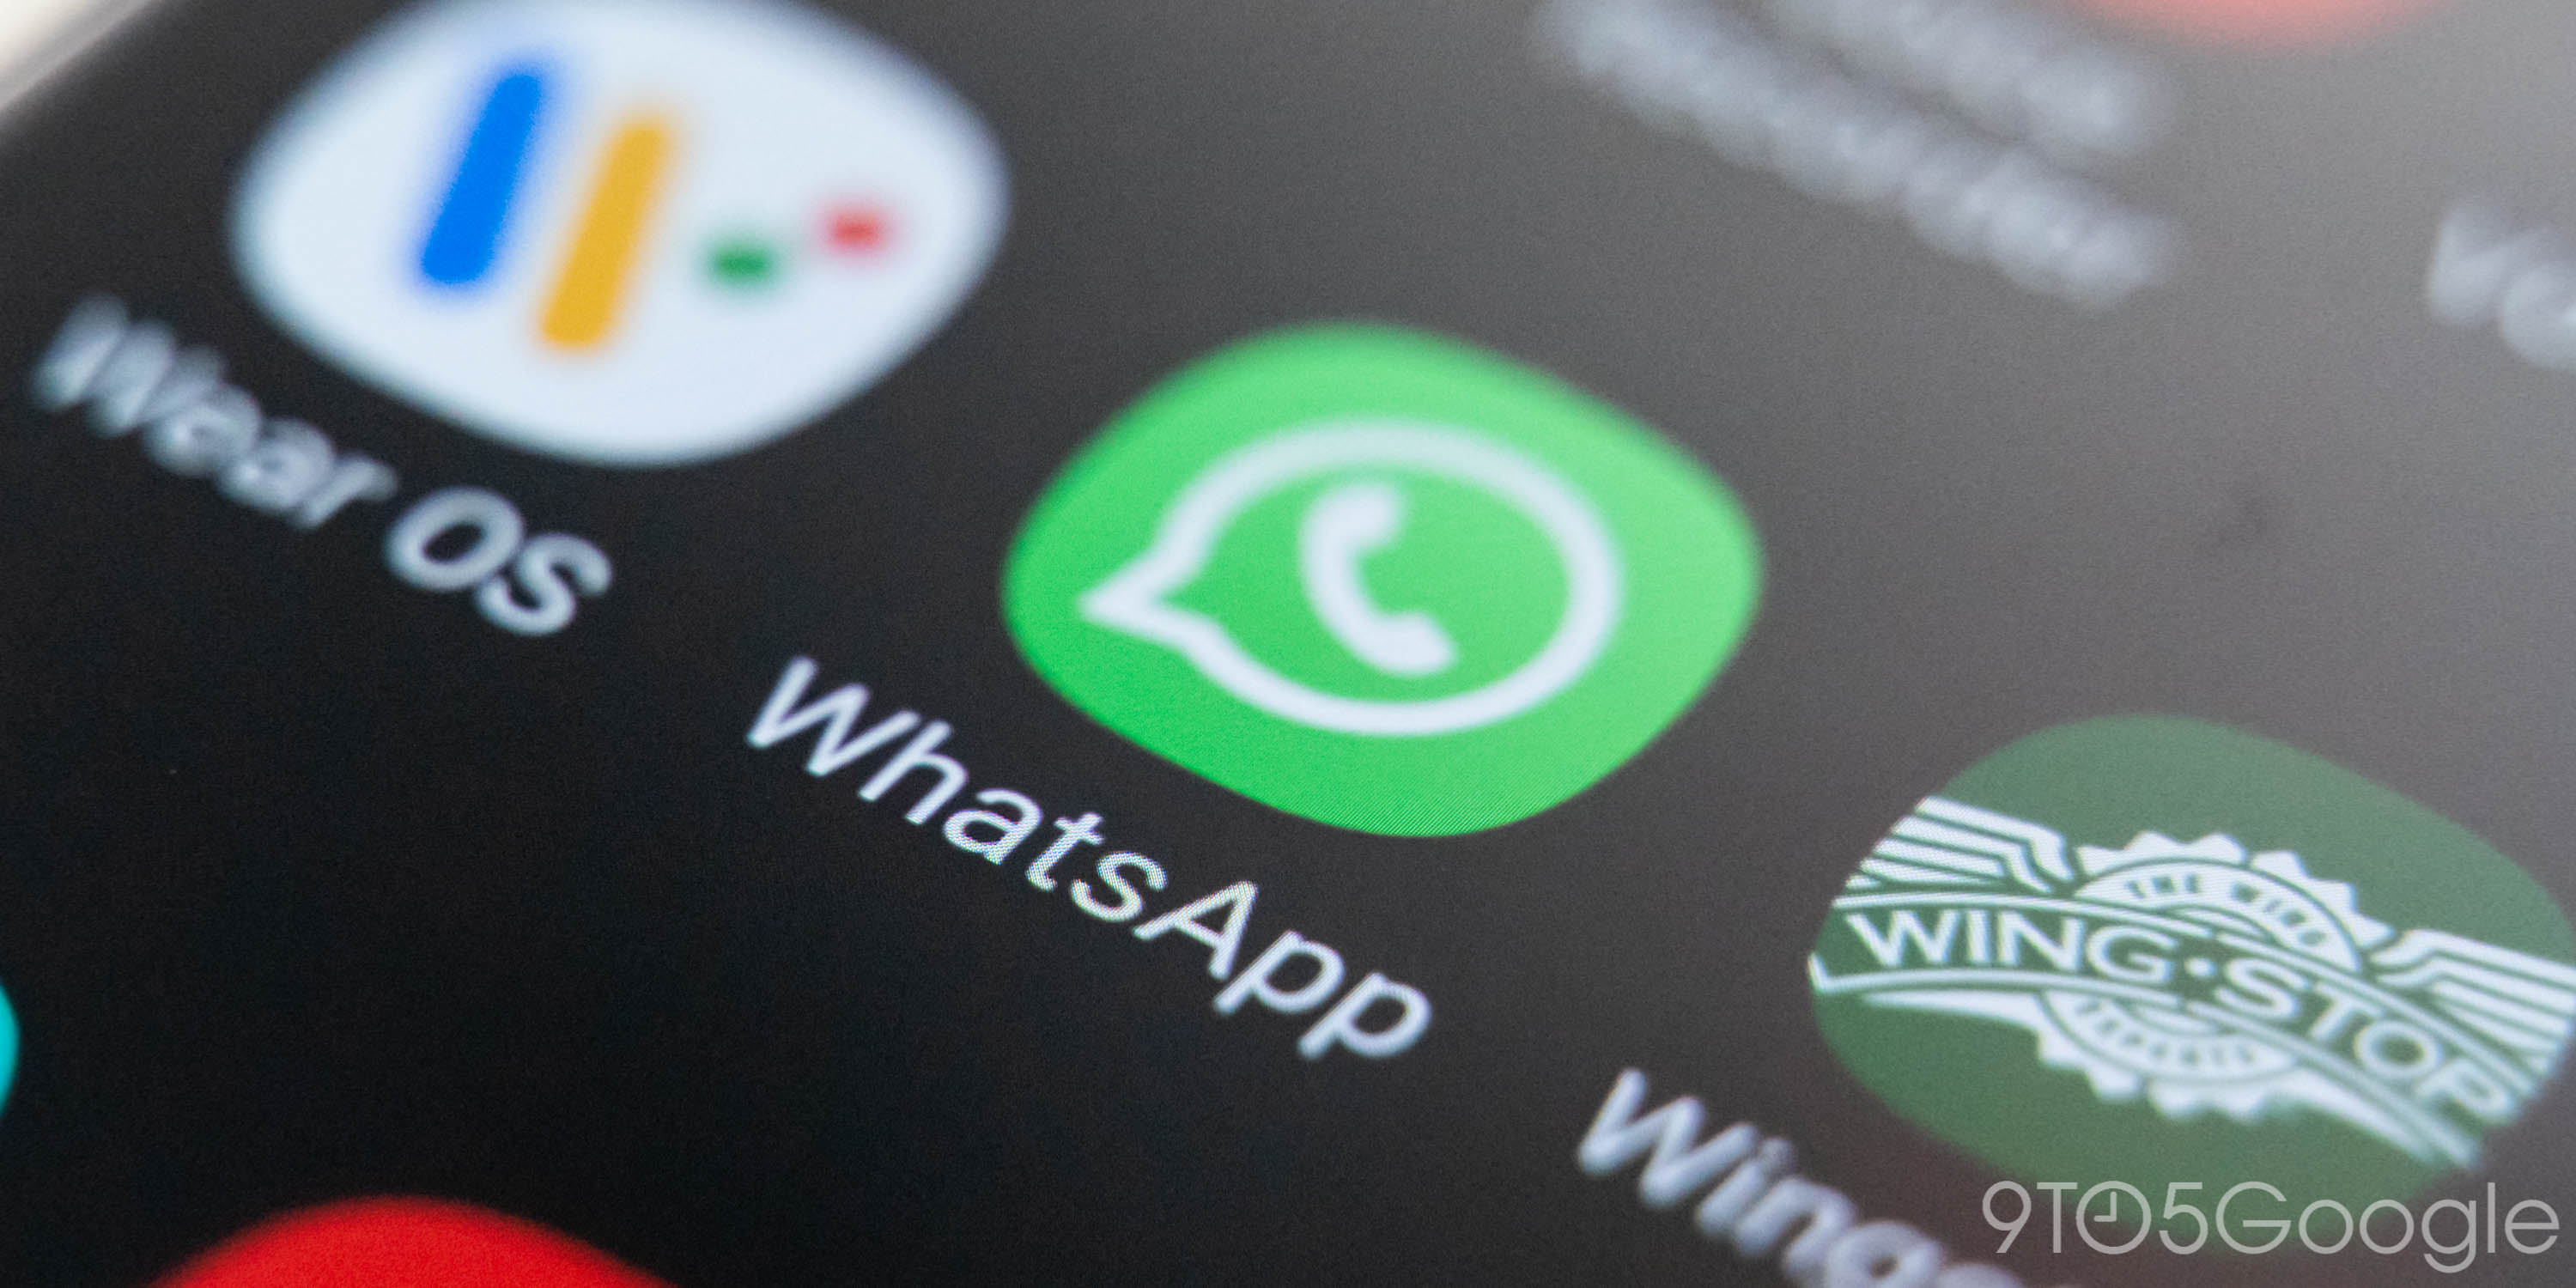 For whatsapp chat numbers WhatsApp Tricks: